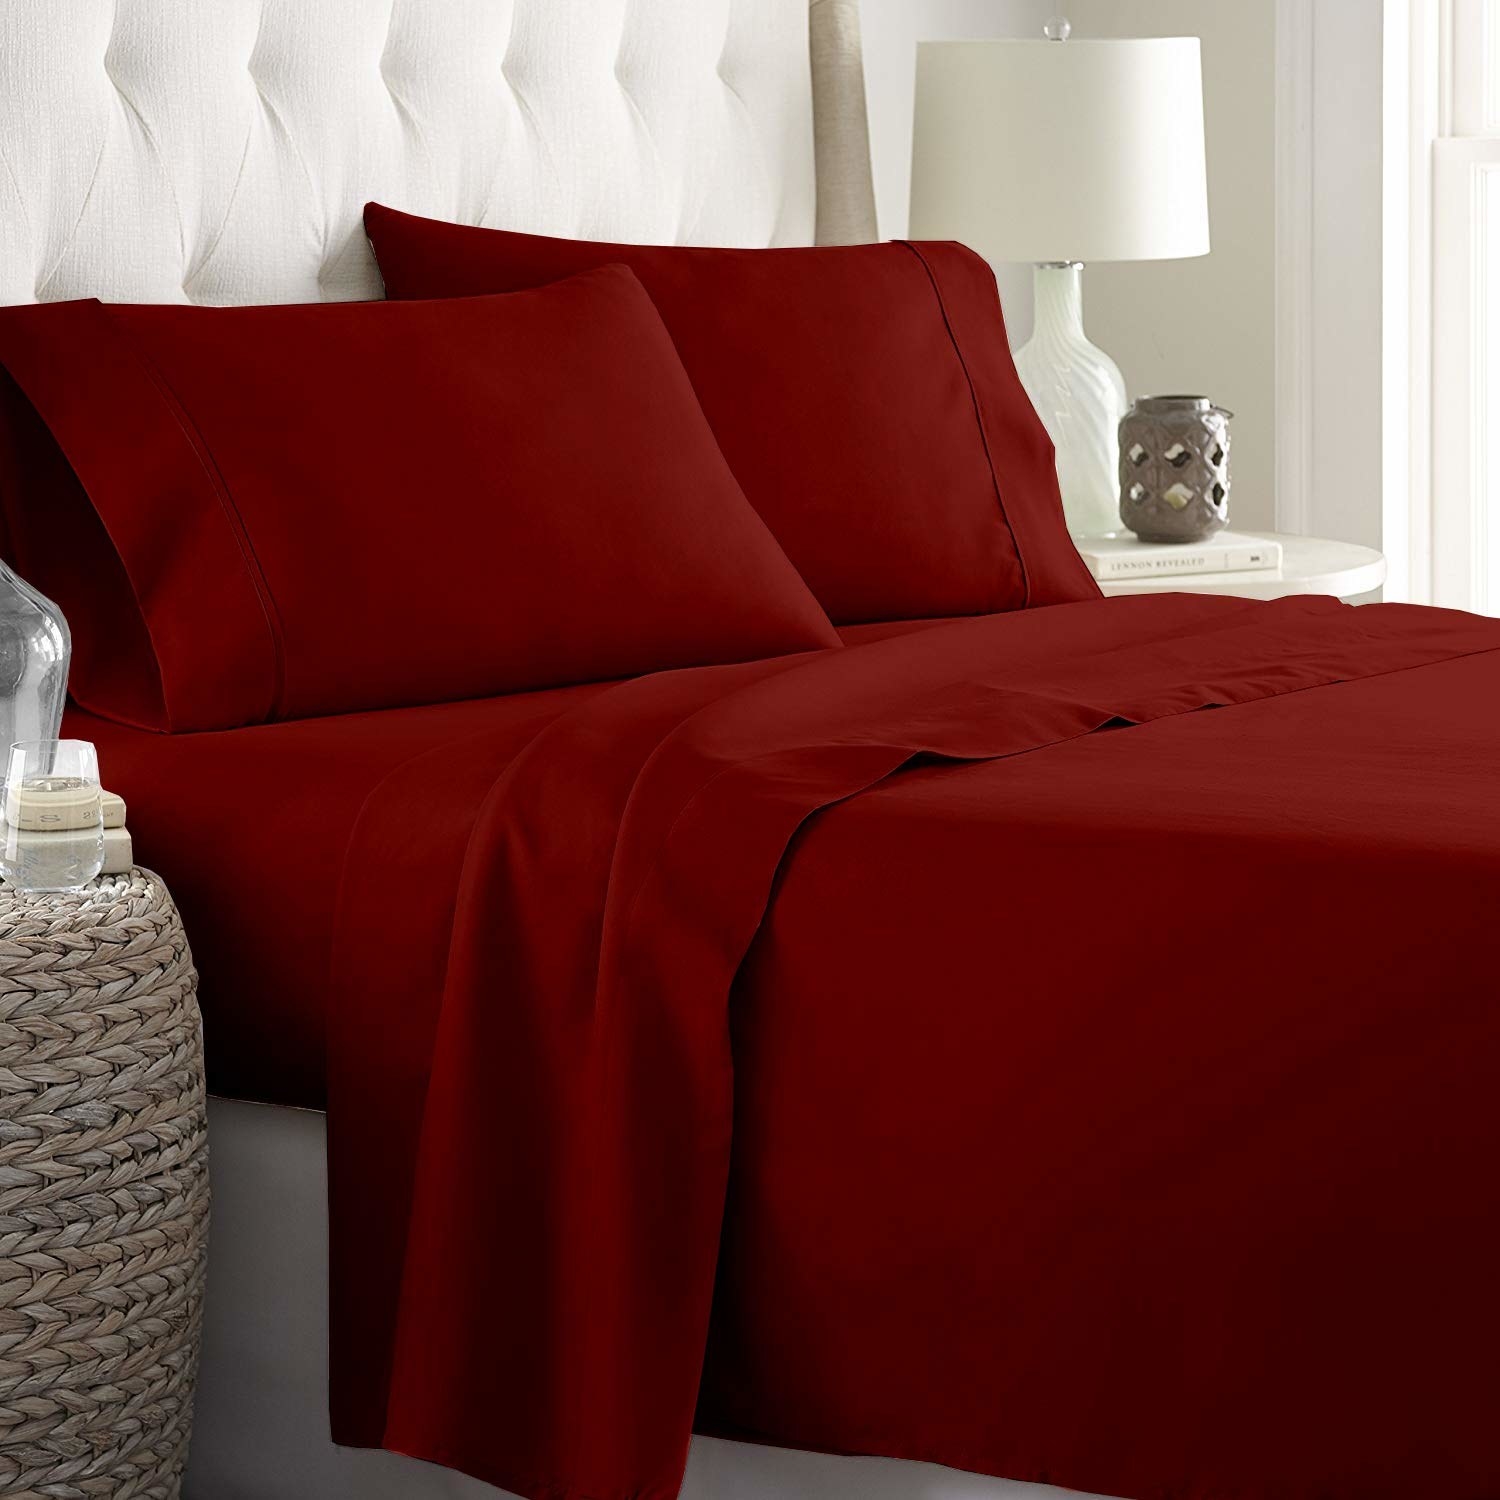 A red cotton bedsheet